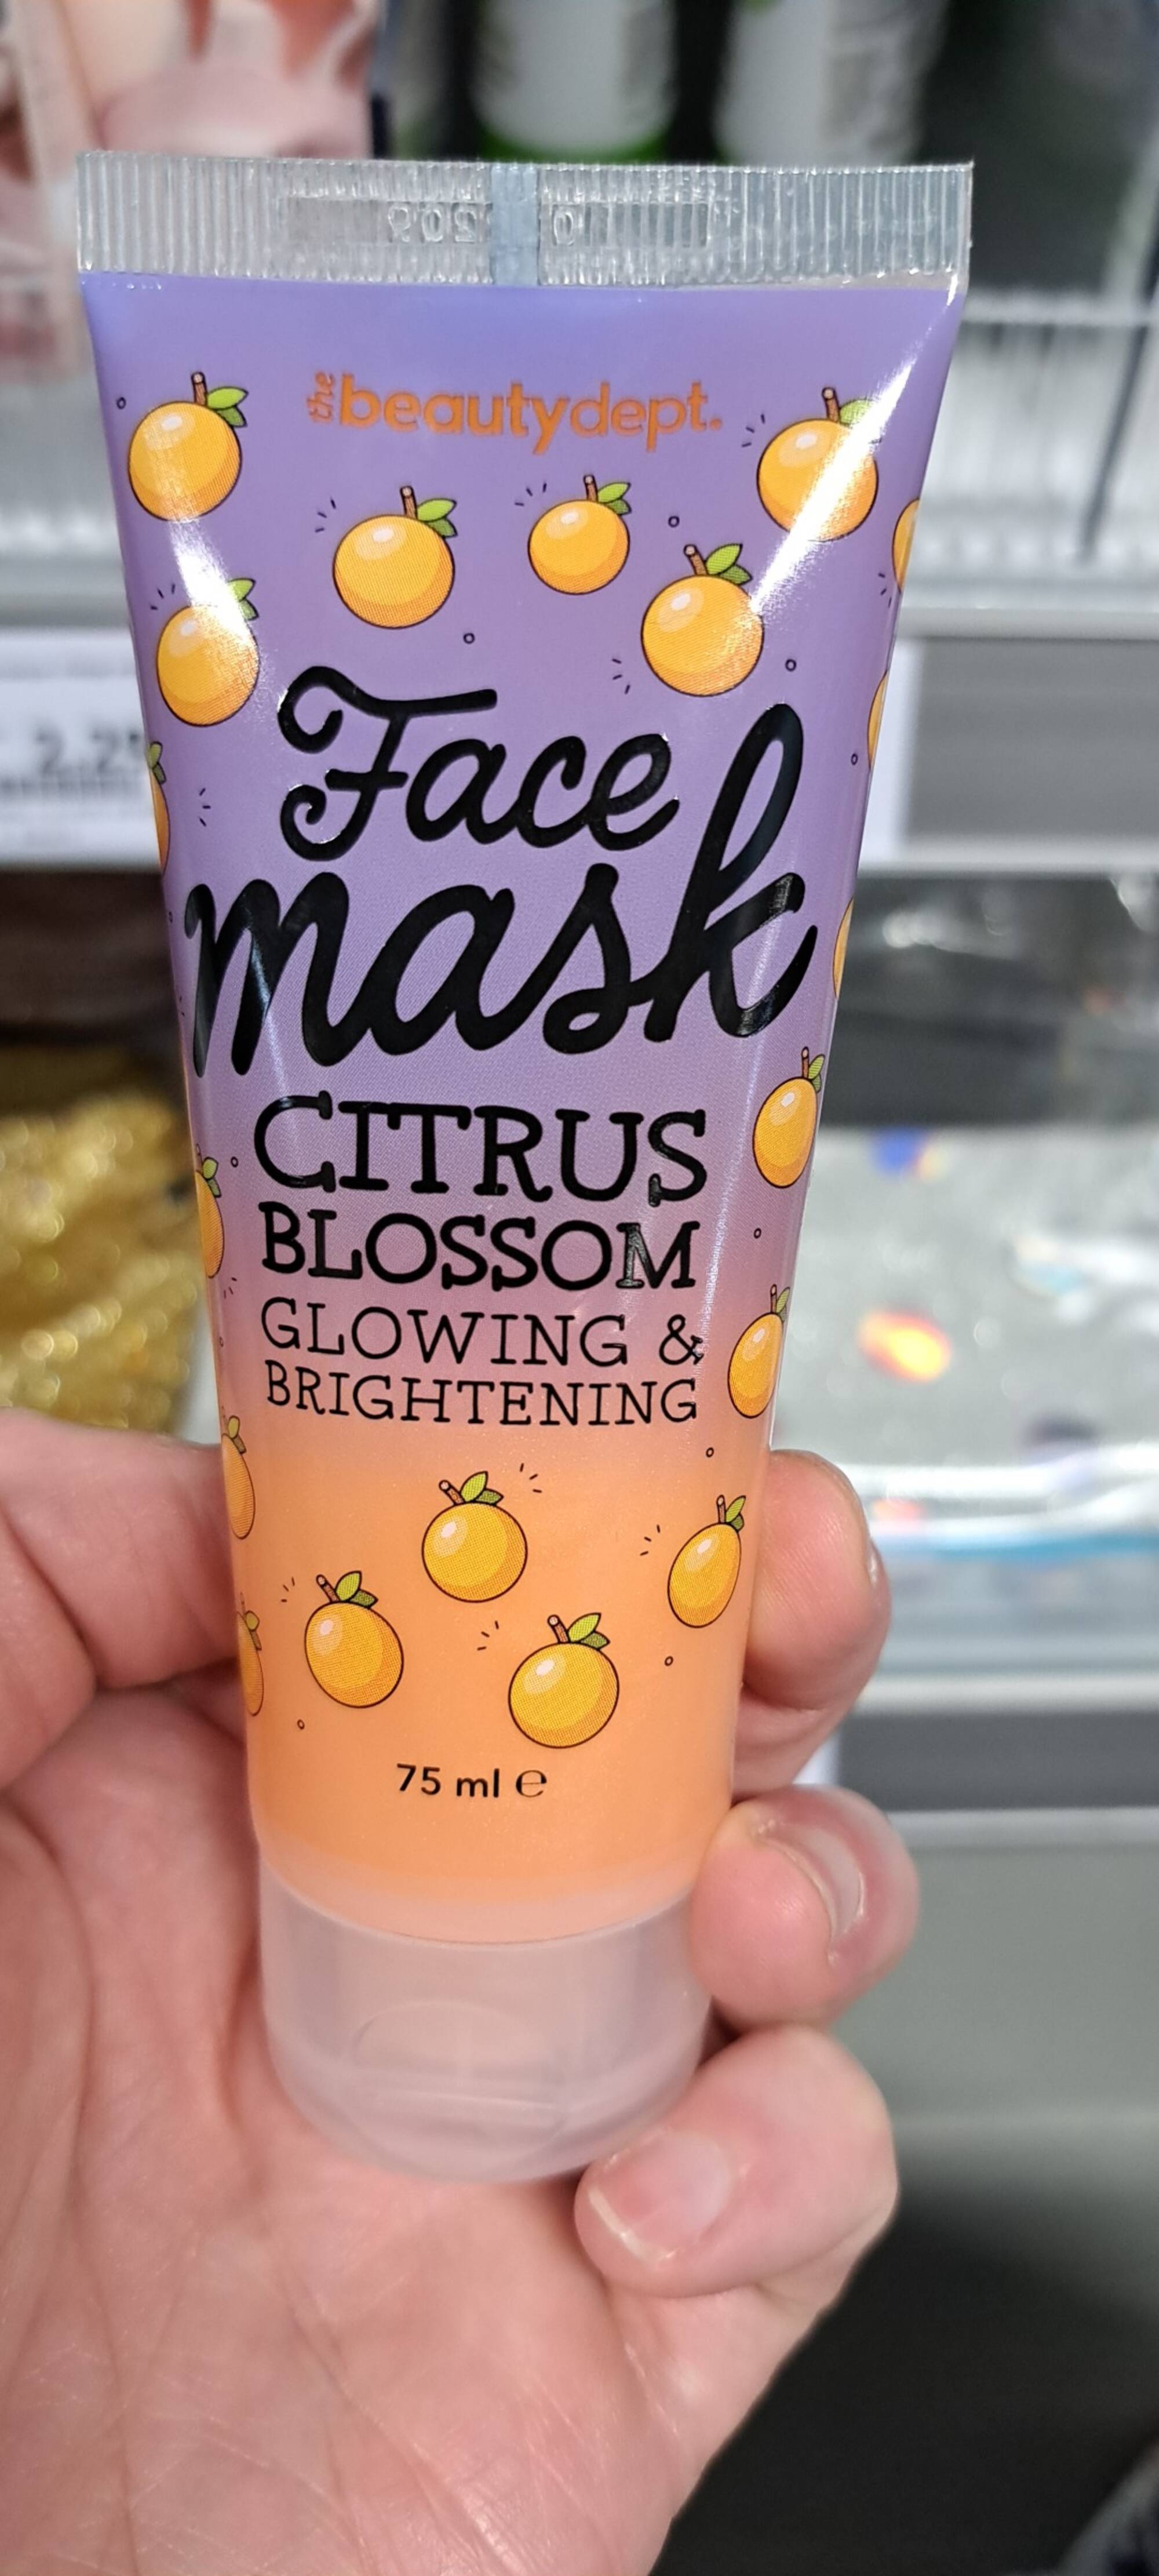 THE BEAUTY DEPT - Citrus blossom - Face mask